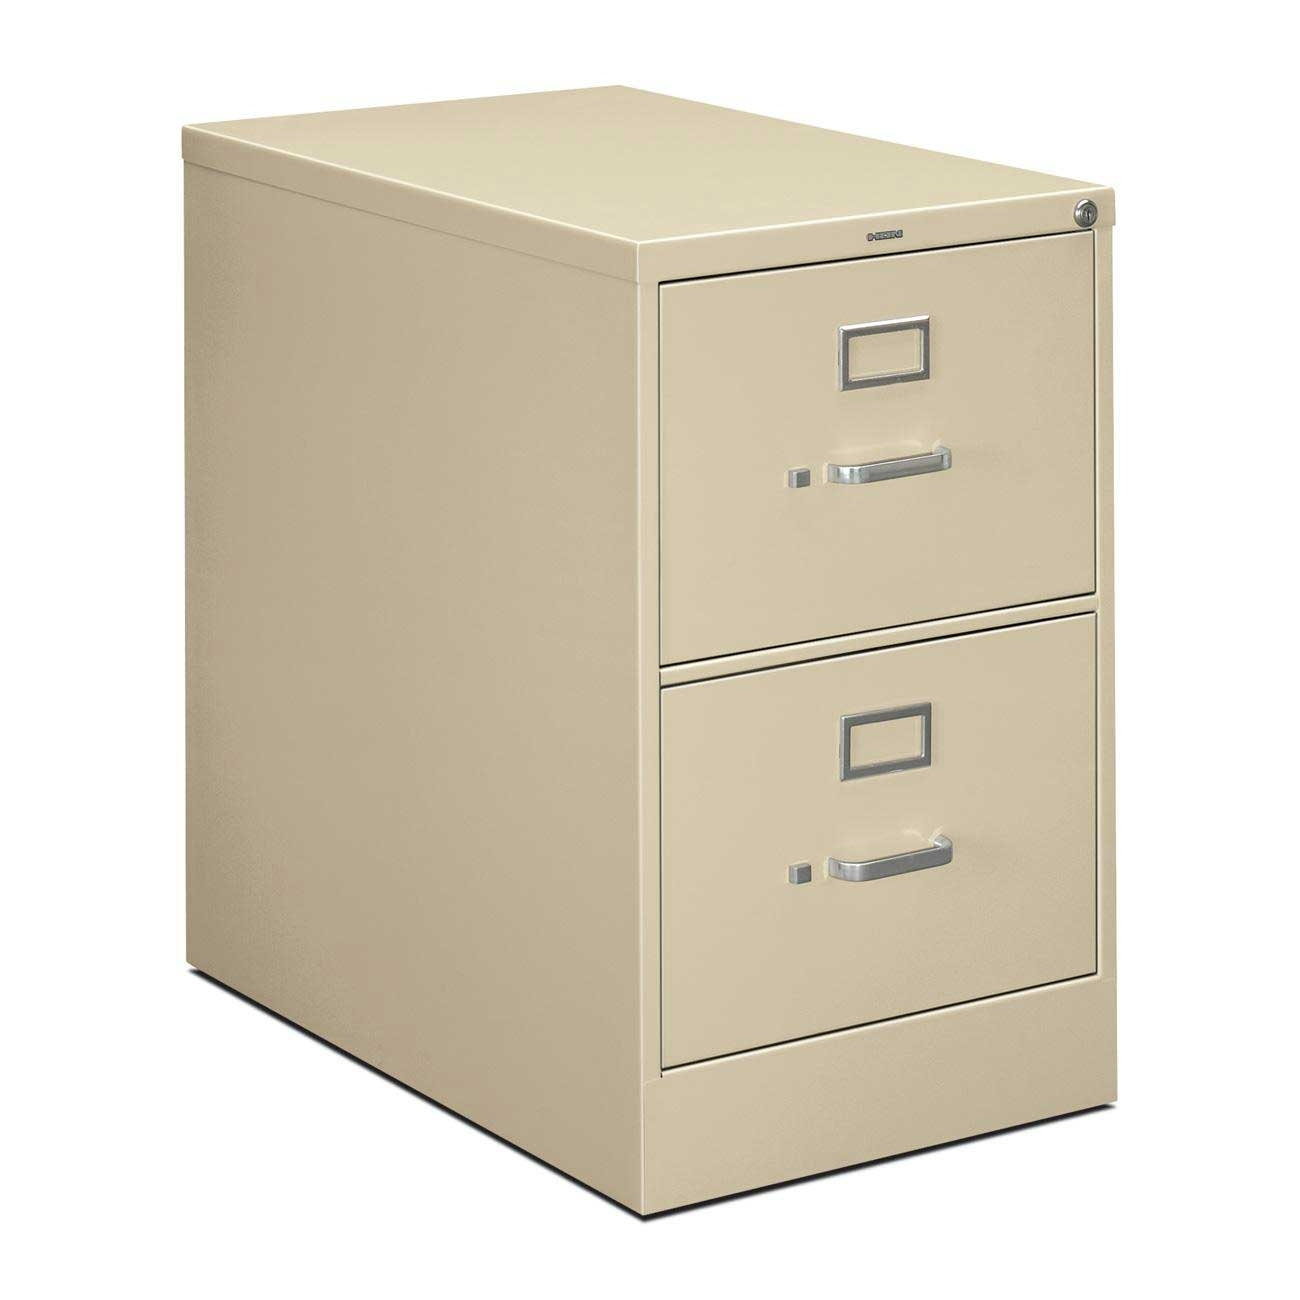 2 Drawer File Cabinet Locking Bar Drawer Design intended for sizing 1300 X 1300